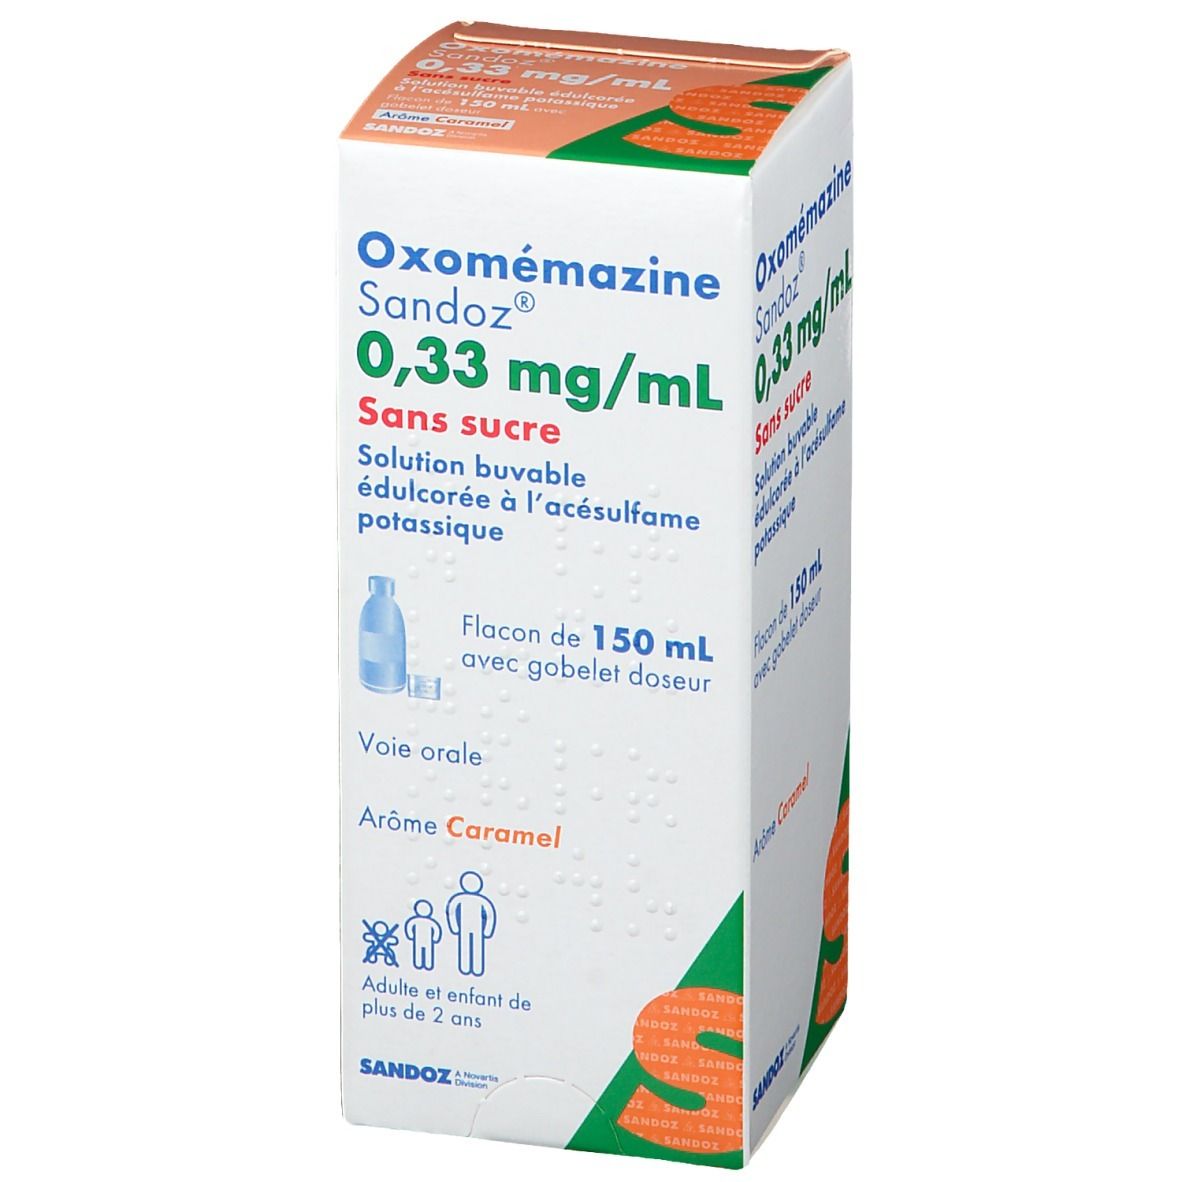 Oxomémazine Sandoz® 0,33 mg/ml s/s